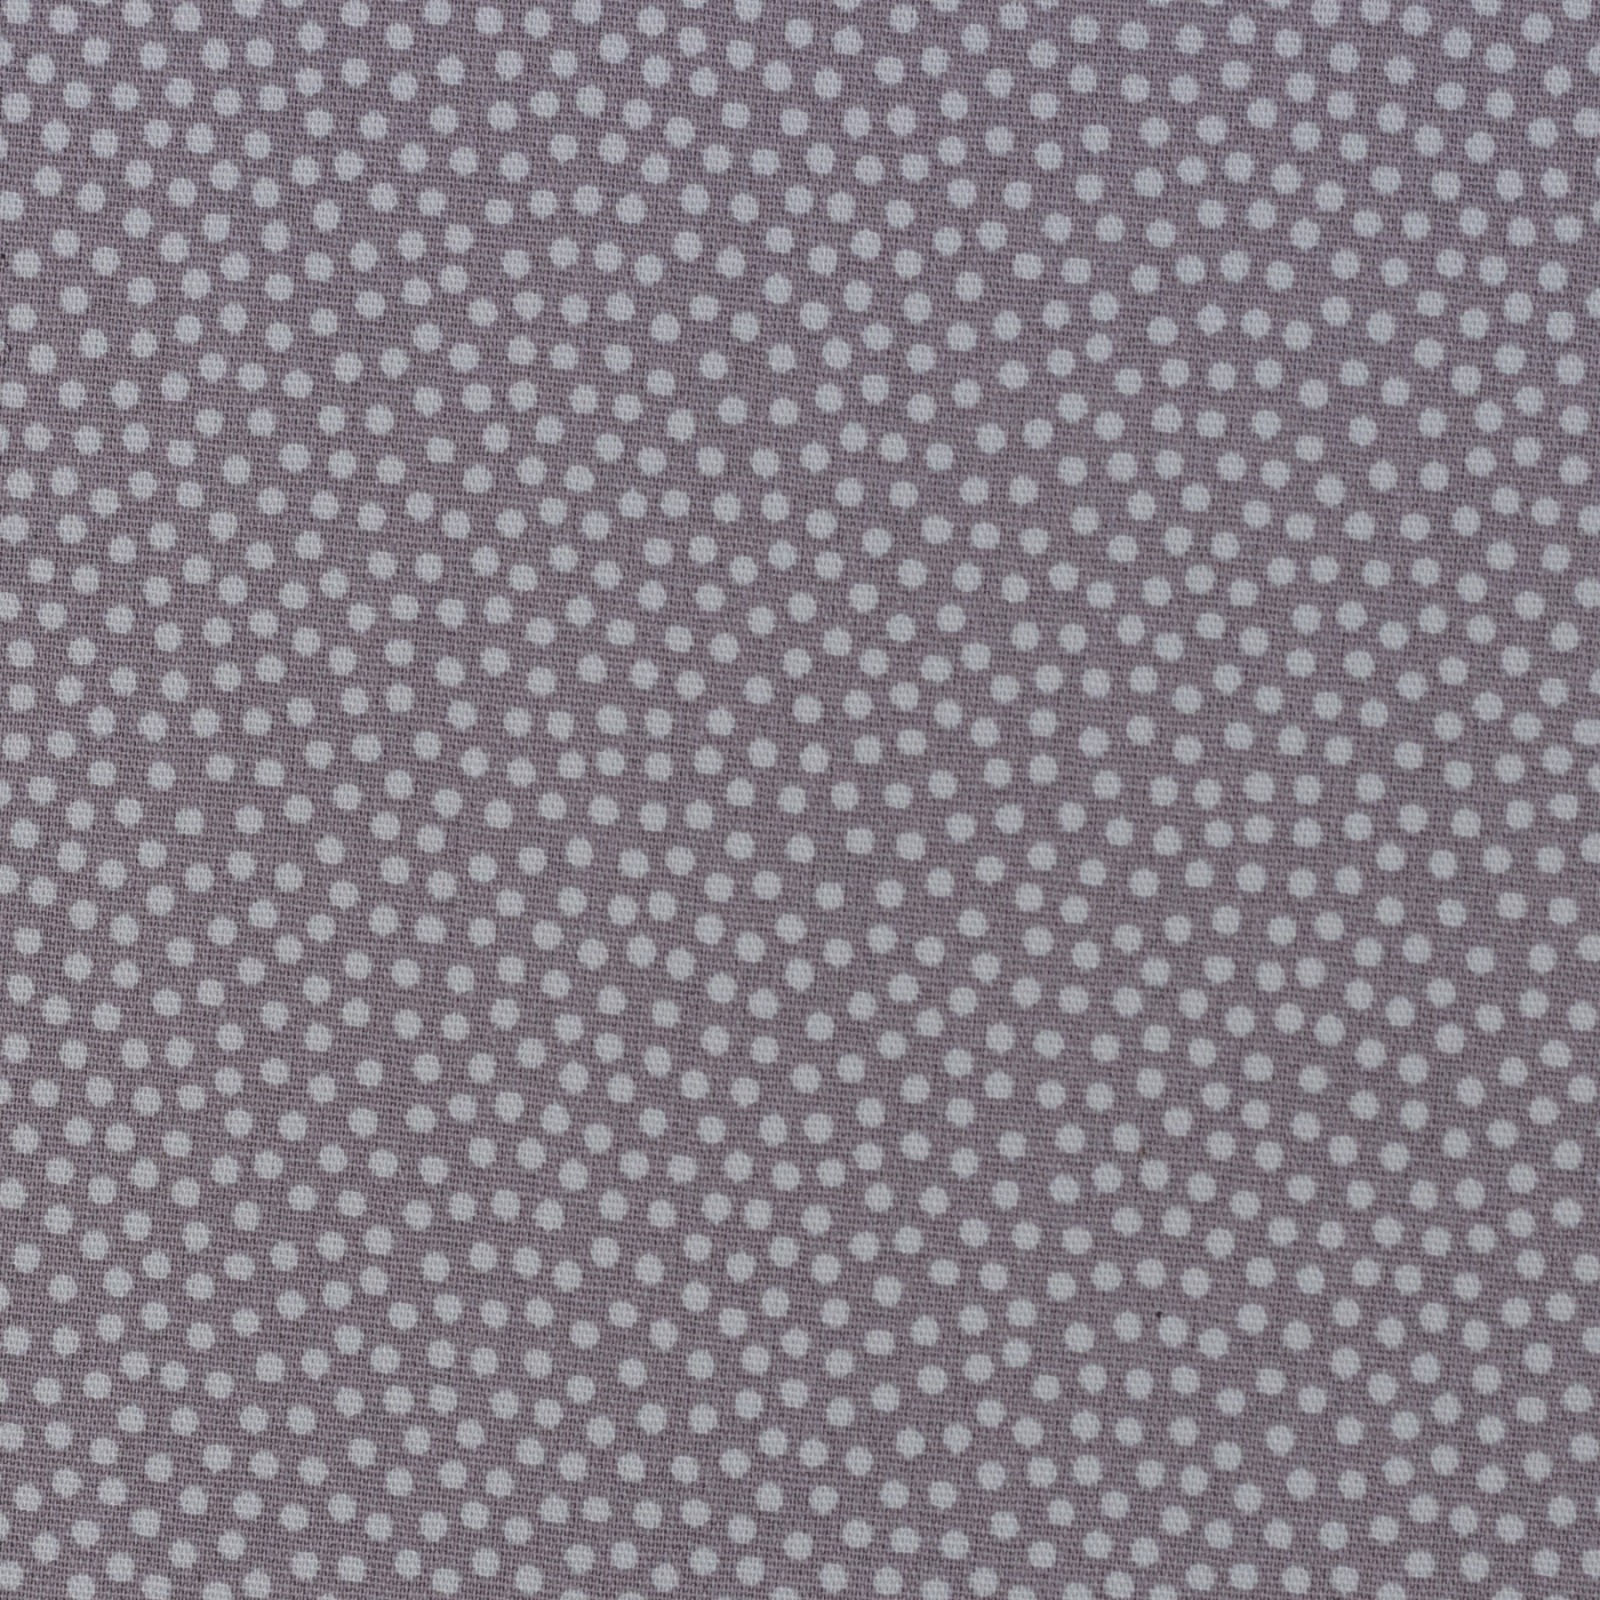 Baumwollwebware - unregelmäßige Punkte - grau - Ton in Ton - 100% Baumwolle - Dotty - Swafing